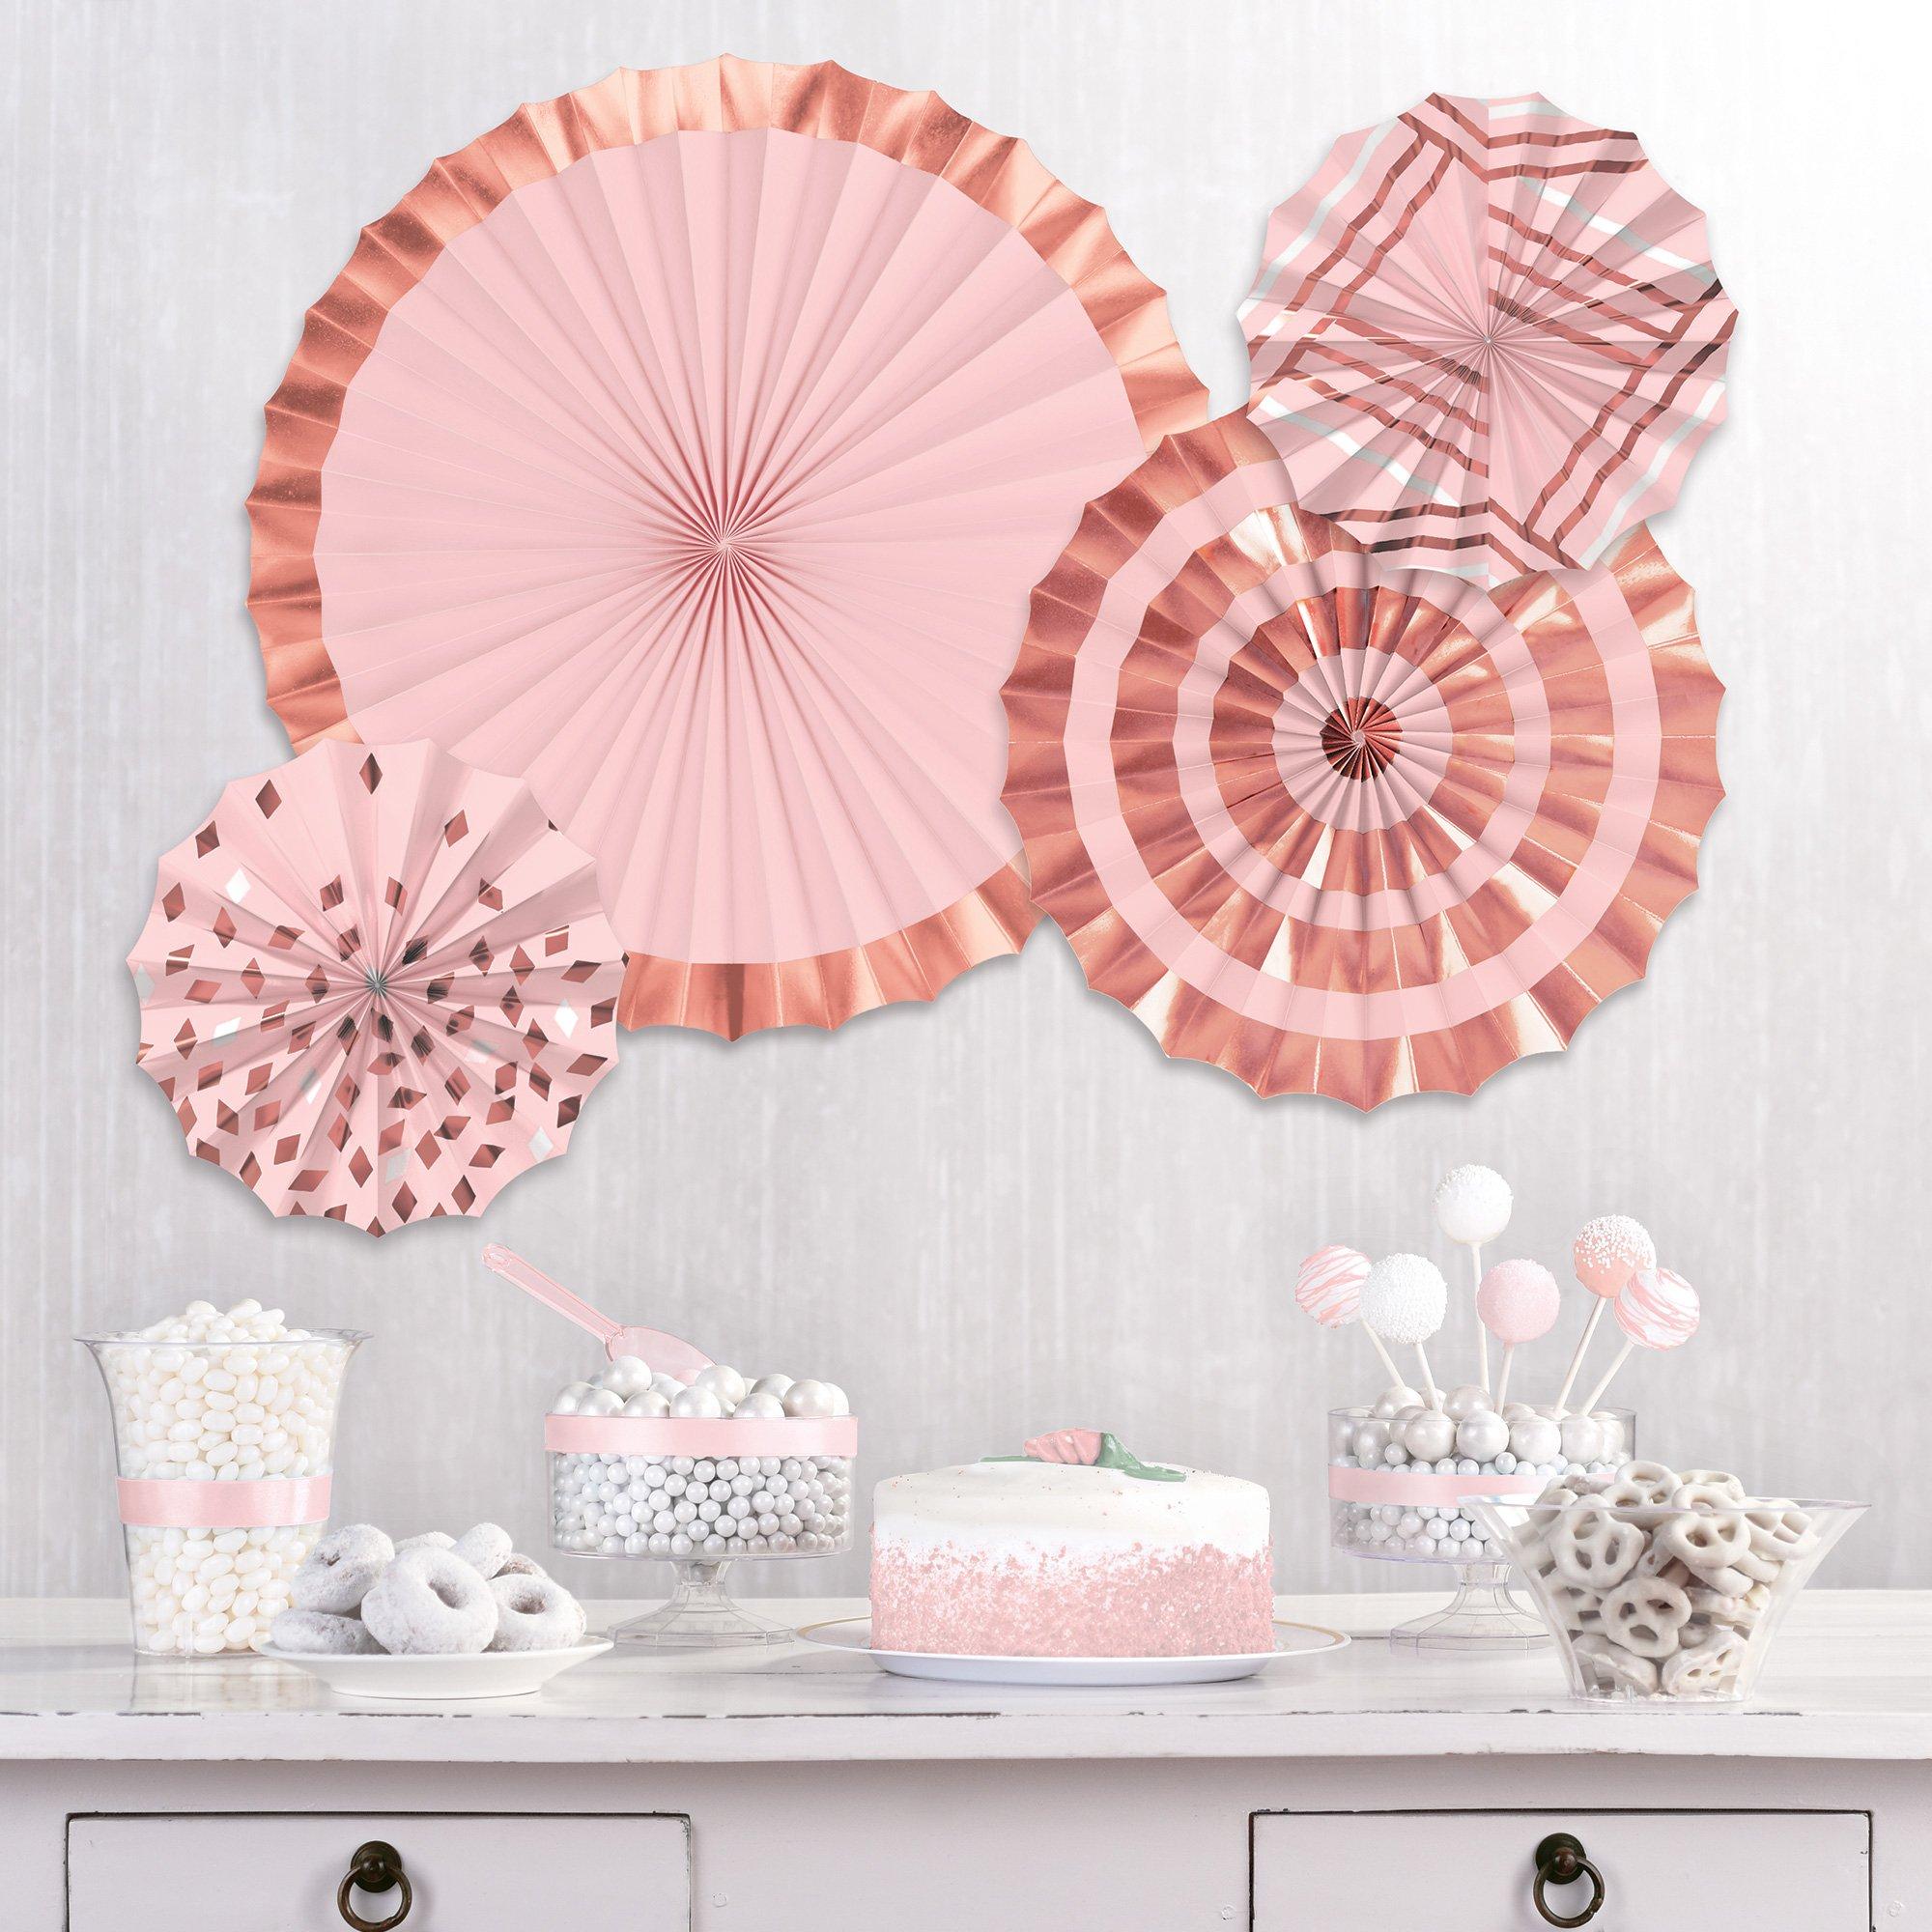 6 Mini Light Pink Tissue Paper Fan Decorations, 3ct